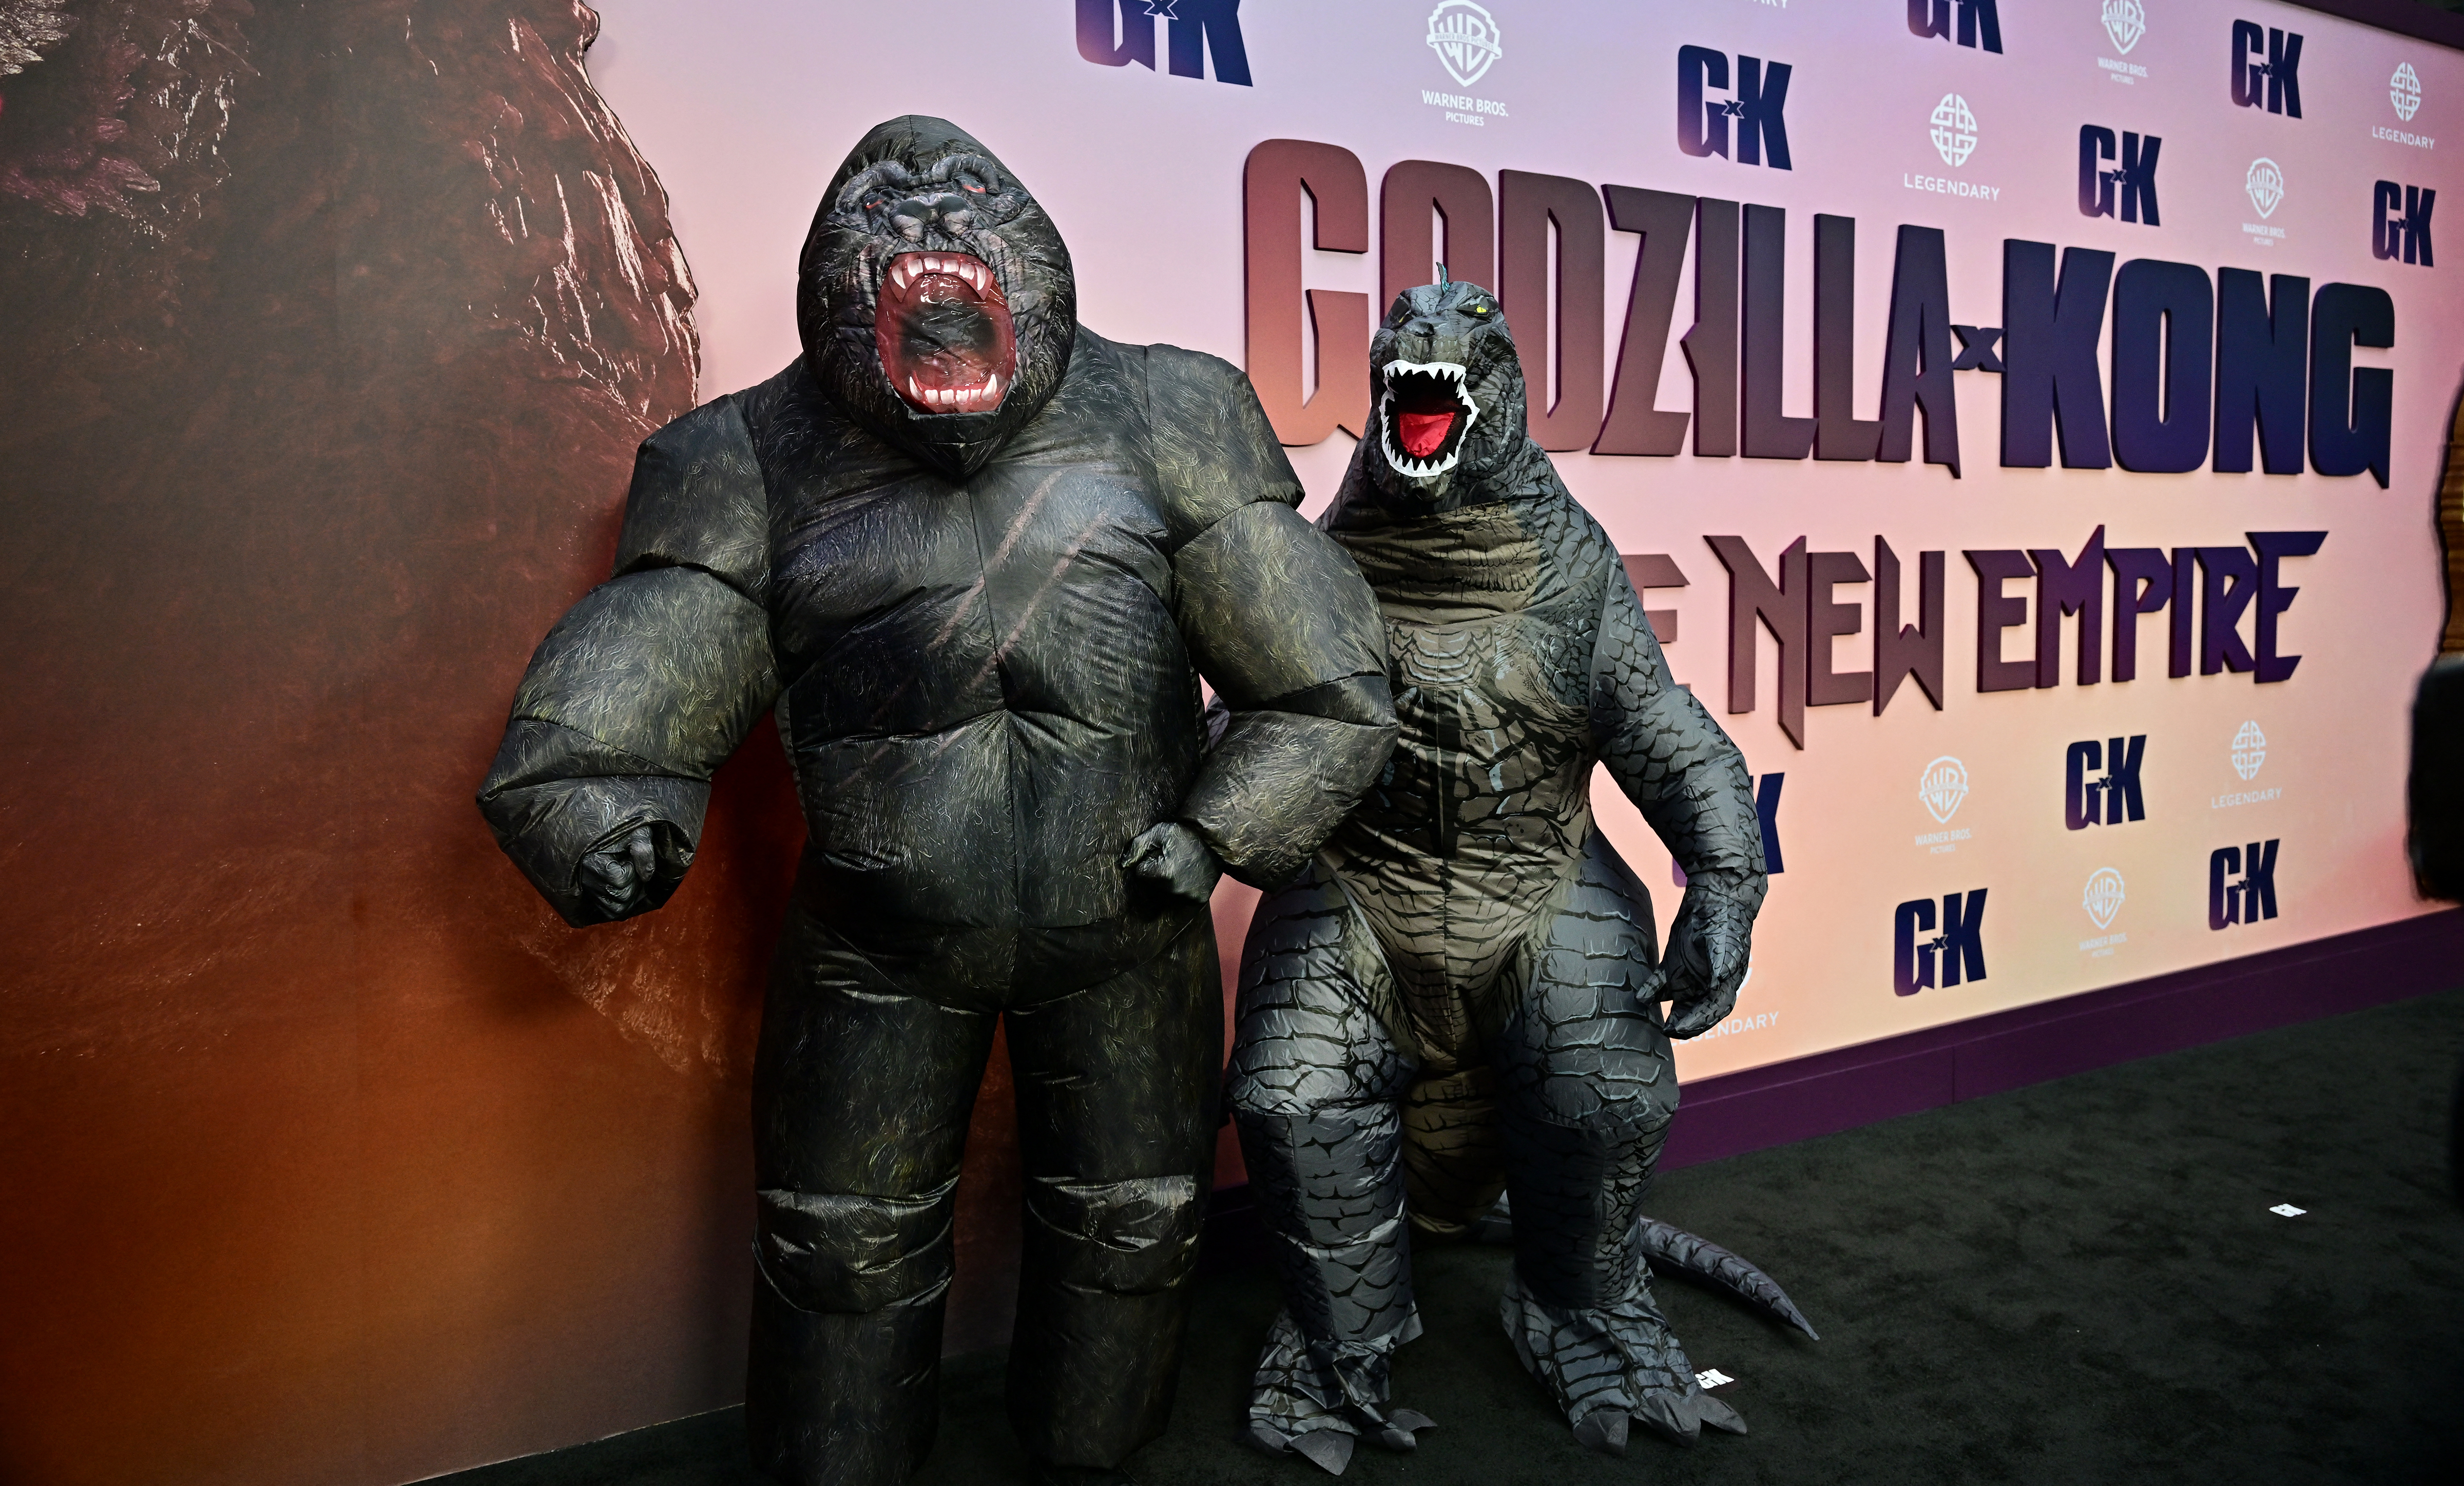 ‘Godzilla x Kong: The New Empire” roars to an $80 million box office opening